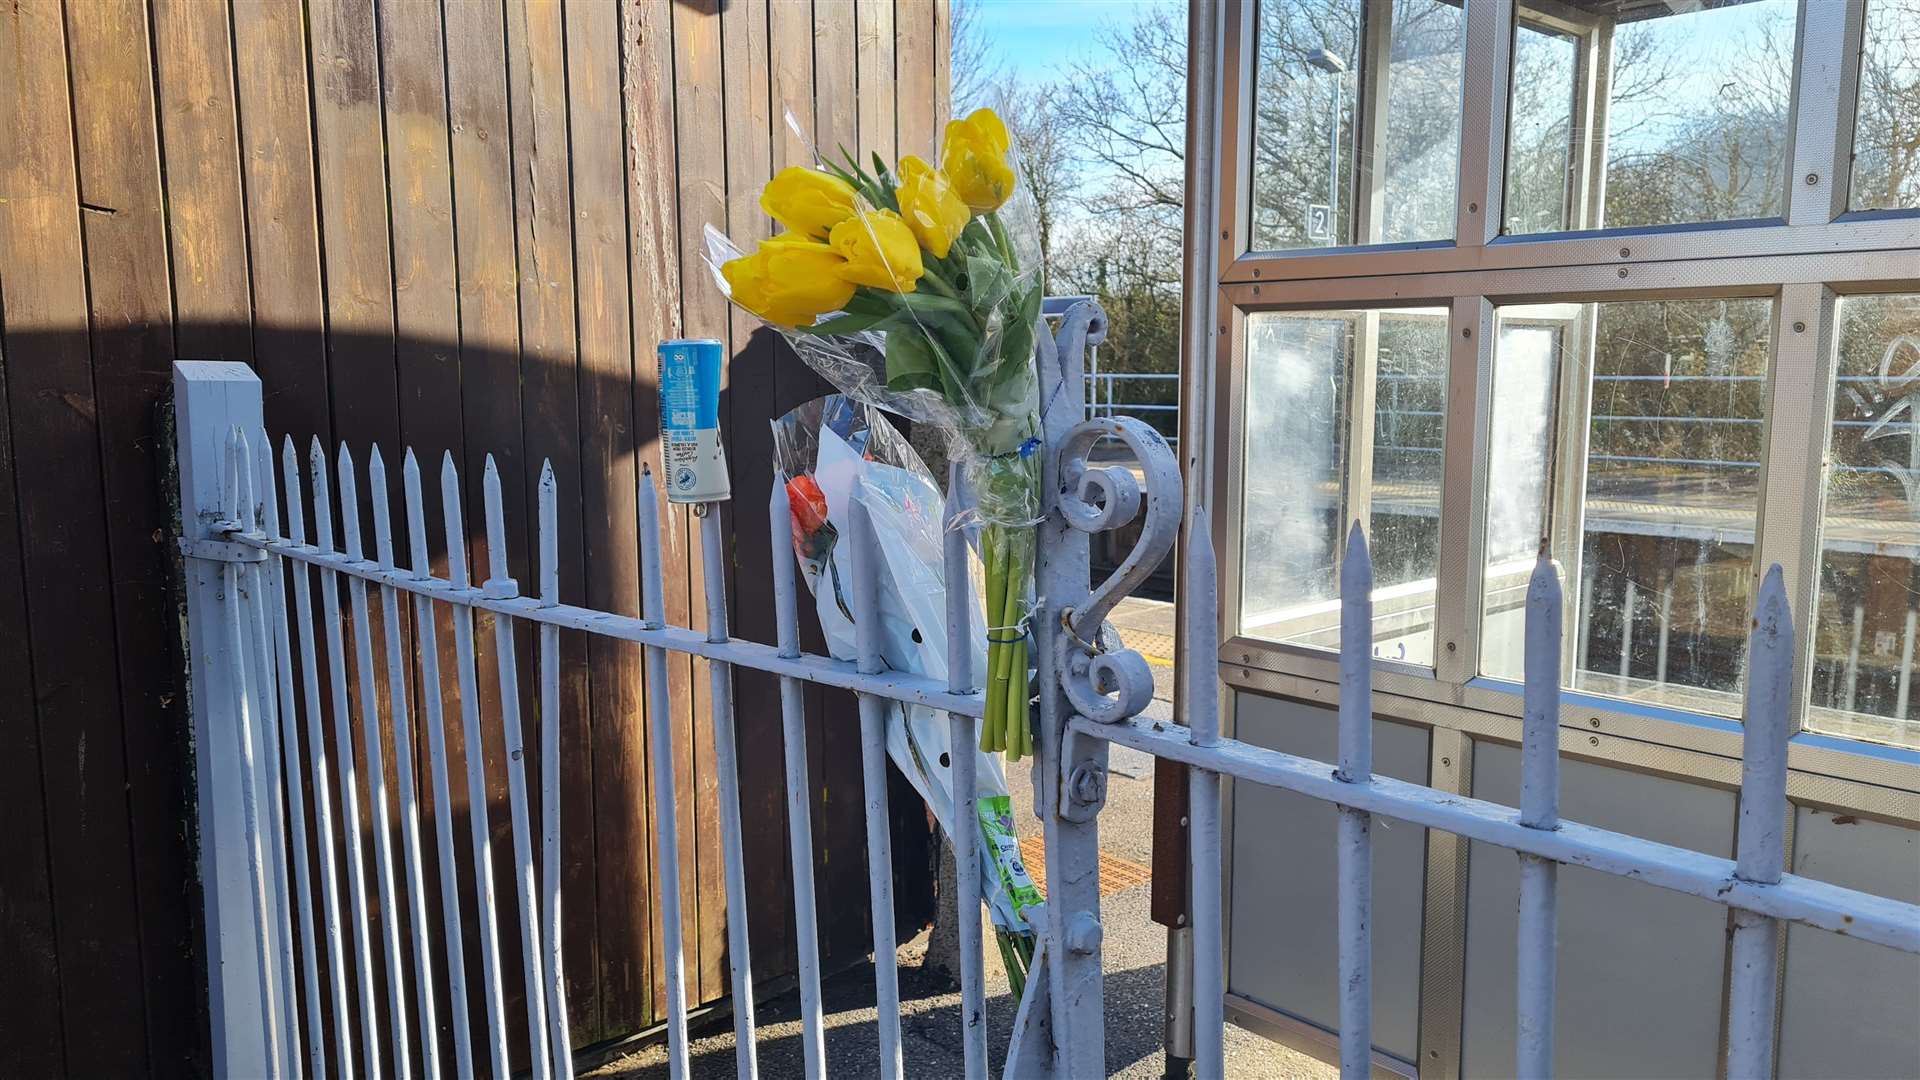 Floral tributes have been left at Minster railway station